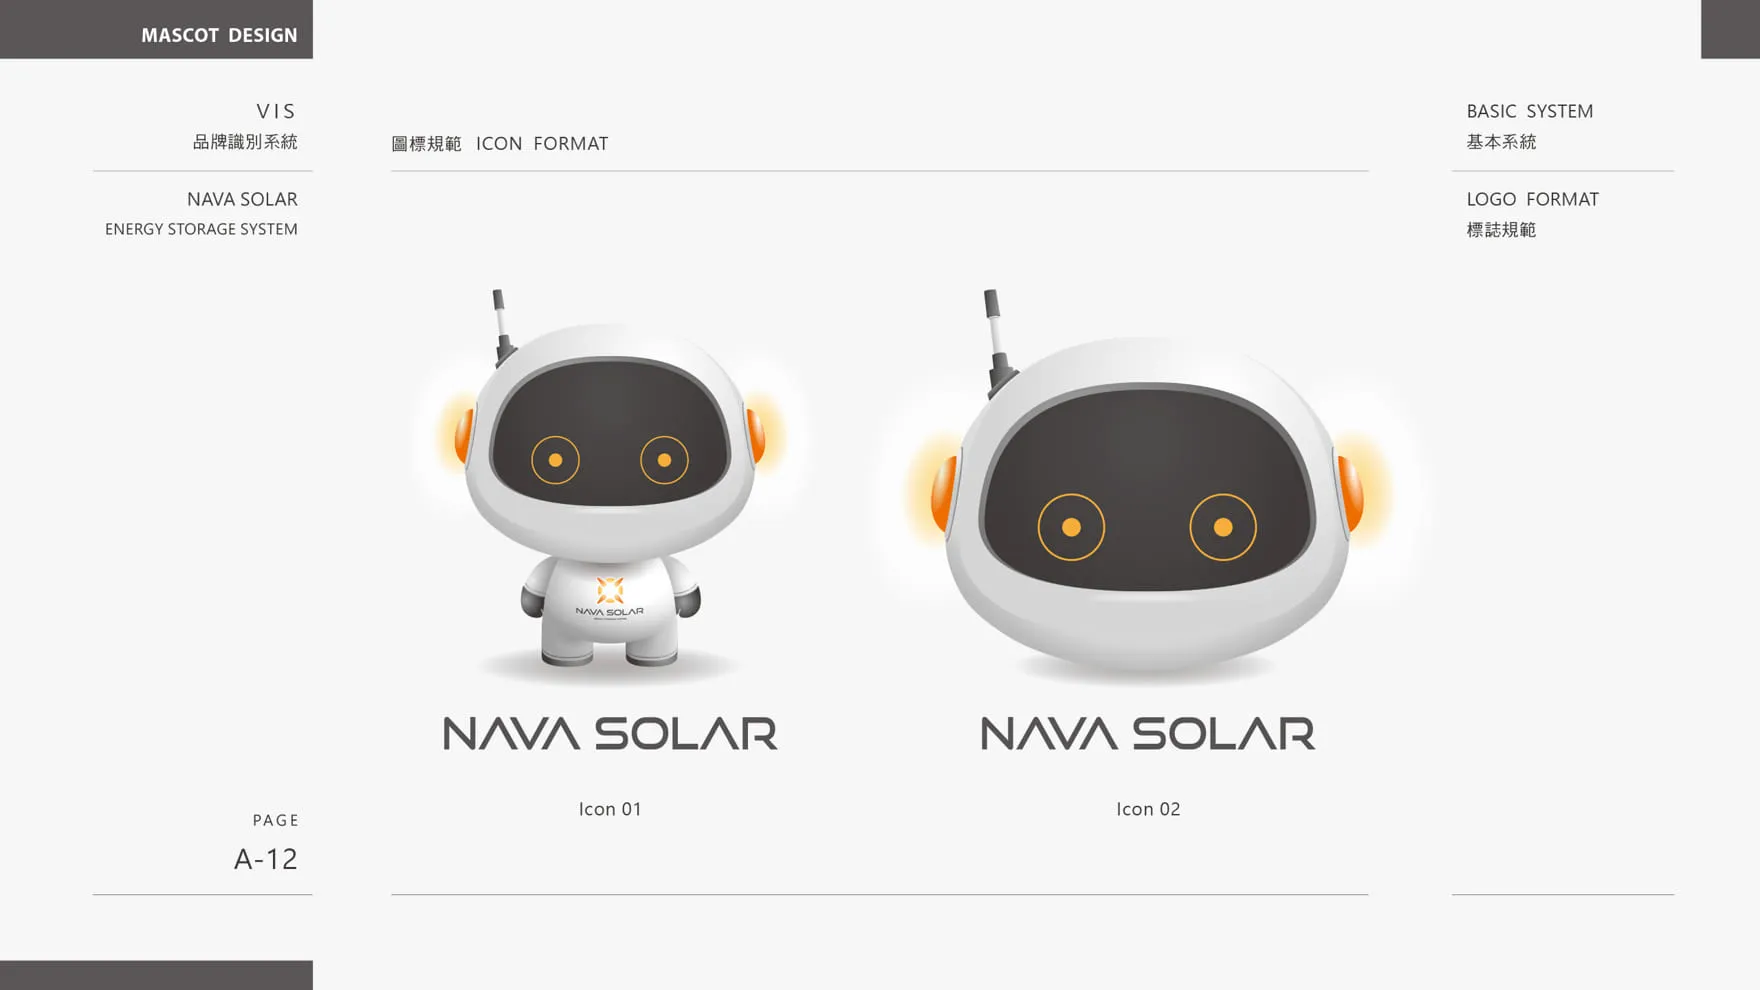 NAVA SOLAR 太陽能光電存儲LOGO品牌吉祥物 Mascot Display